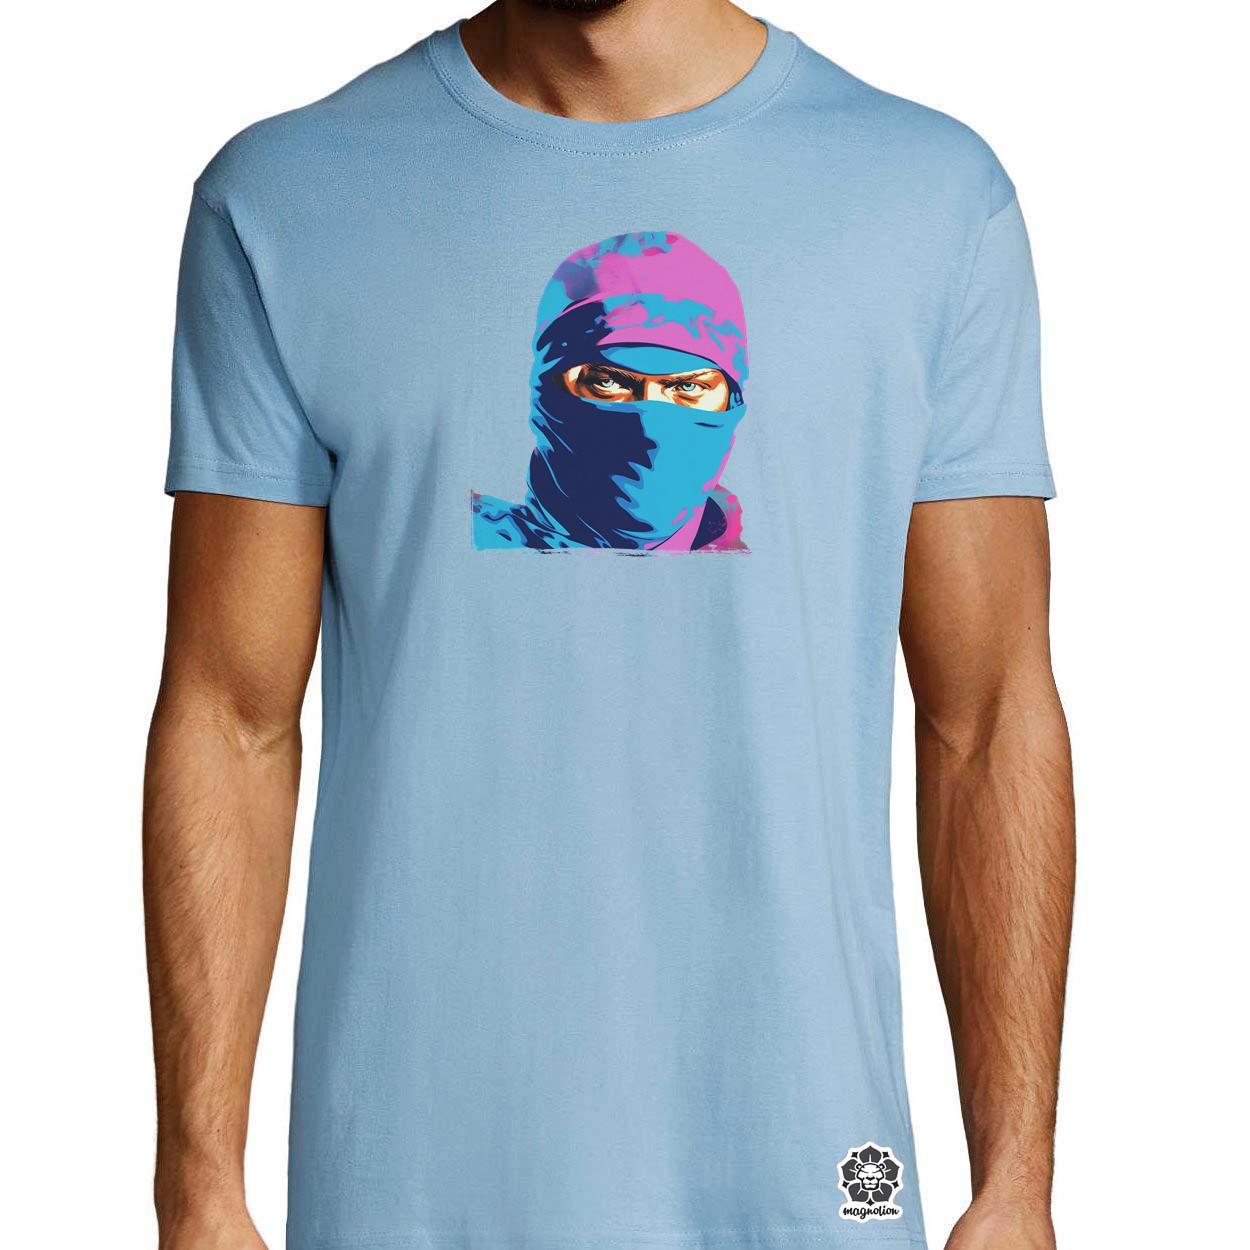 Warhol ninja